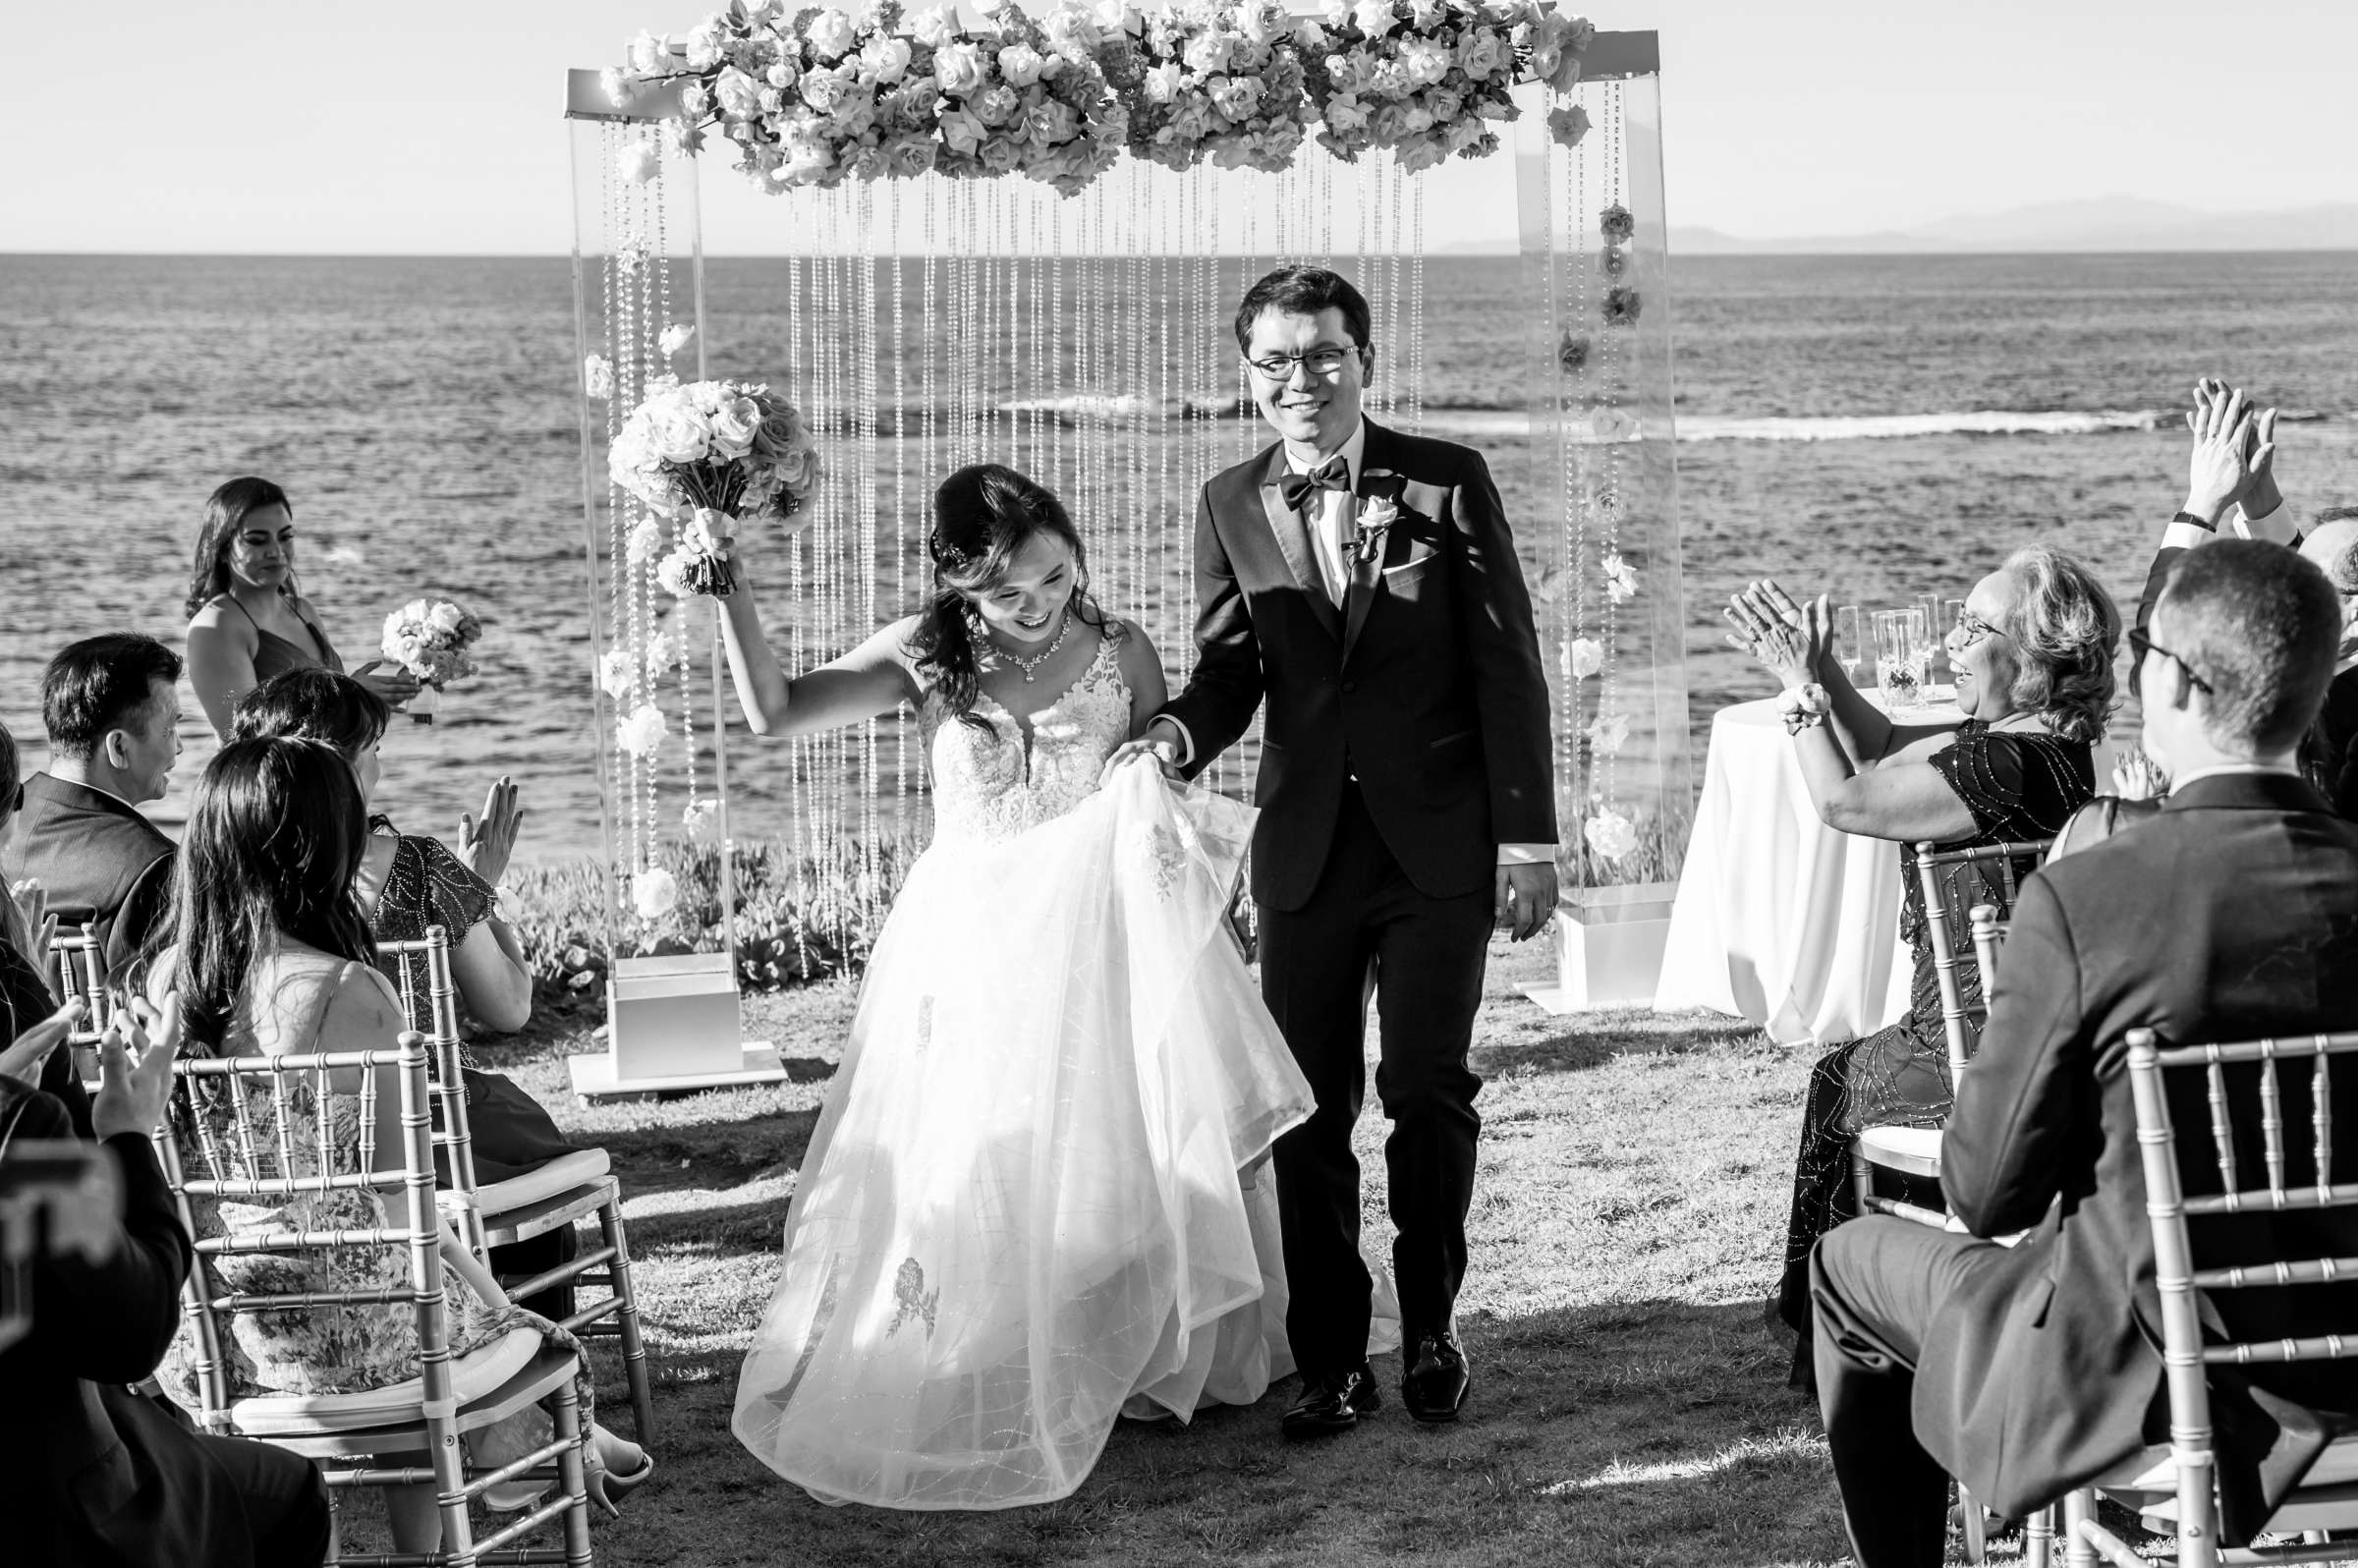 Cuvier Park-The Wedding Bowl Wedding, Yanjie and Tony Wedding Photo #22 by True Photography